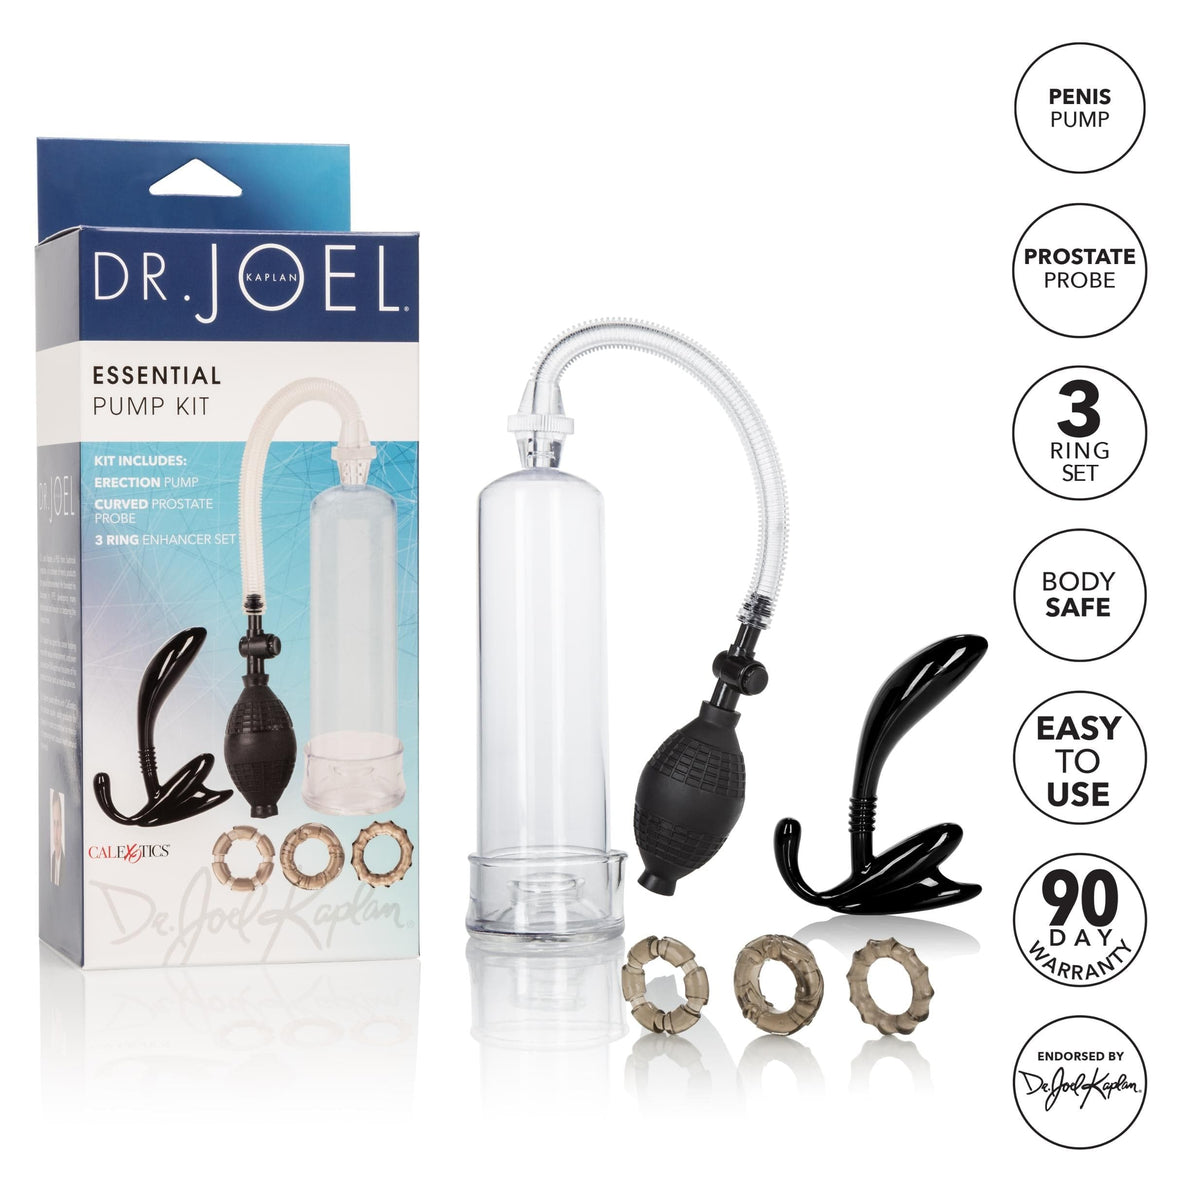 dr joel kaplan essential pump kit